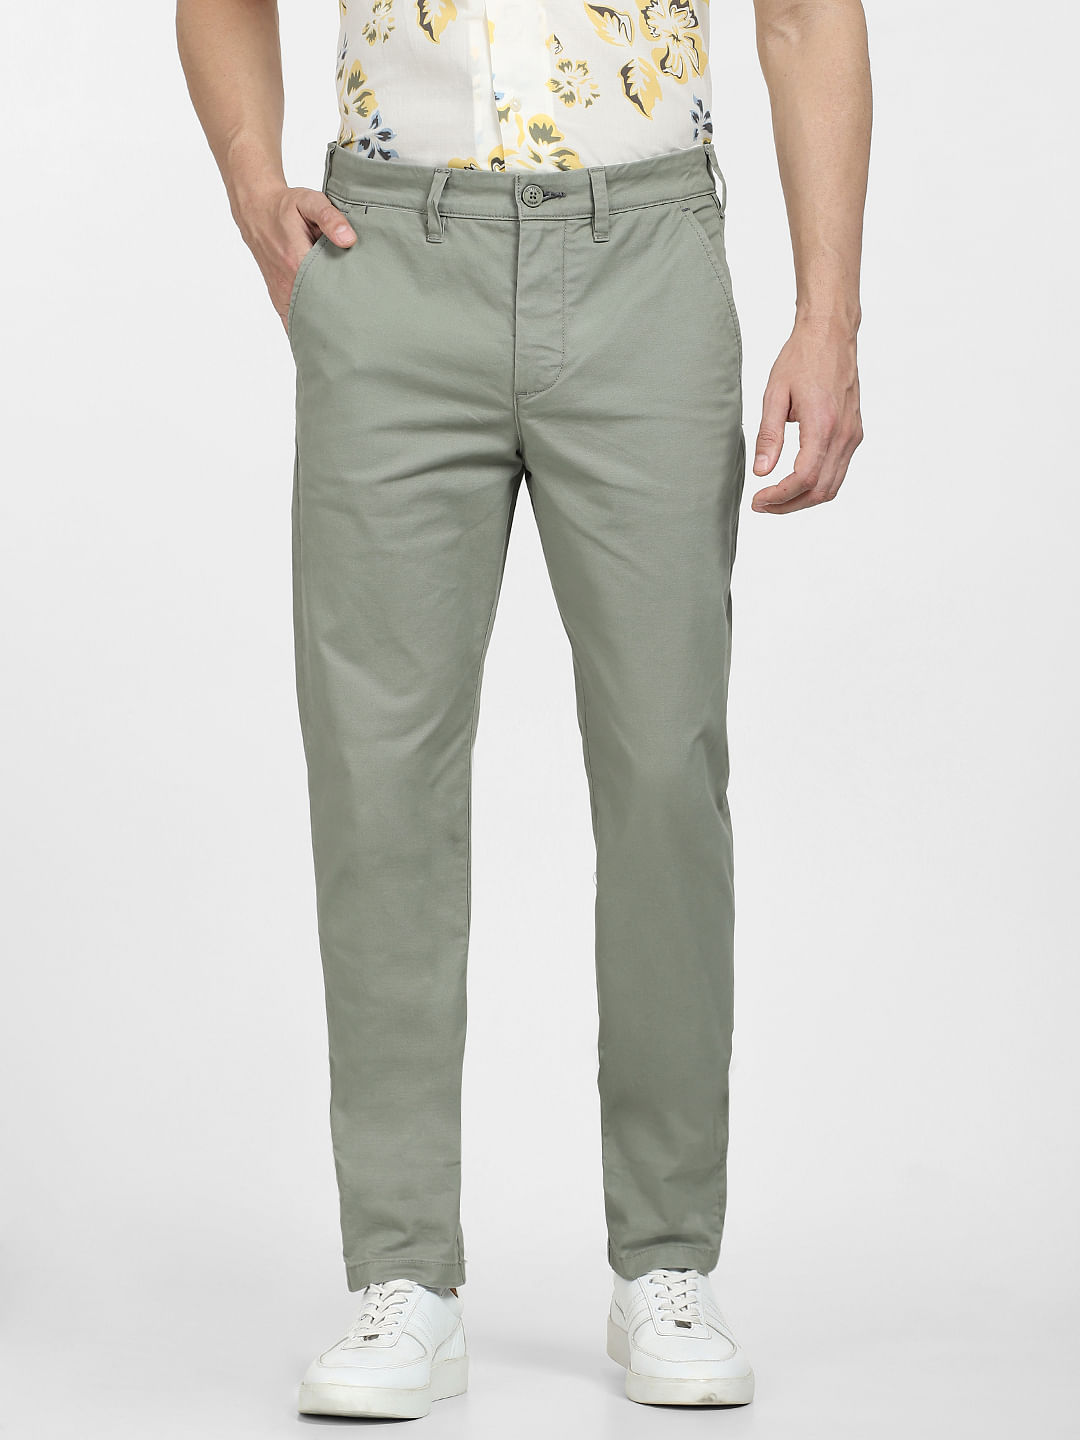 Men's PUMA X One8 Slim Fit Pants in White/Gray size S | PUMA | Whitefield |  Bengaluru